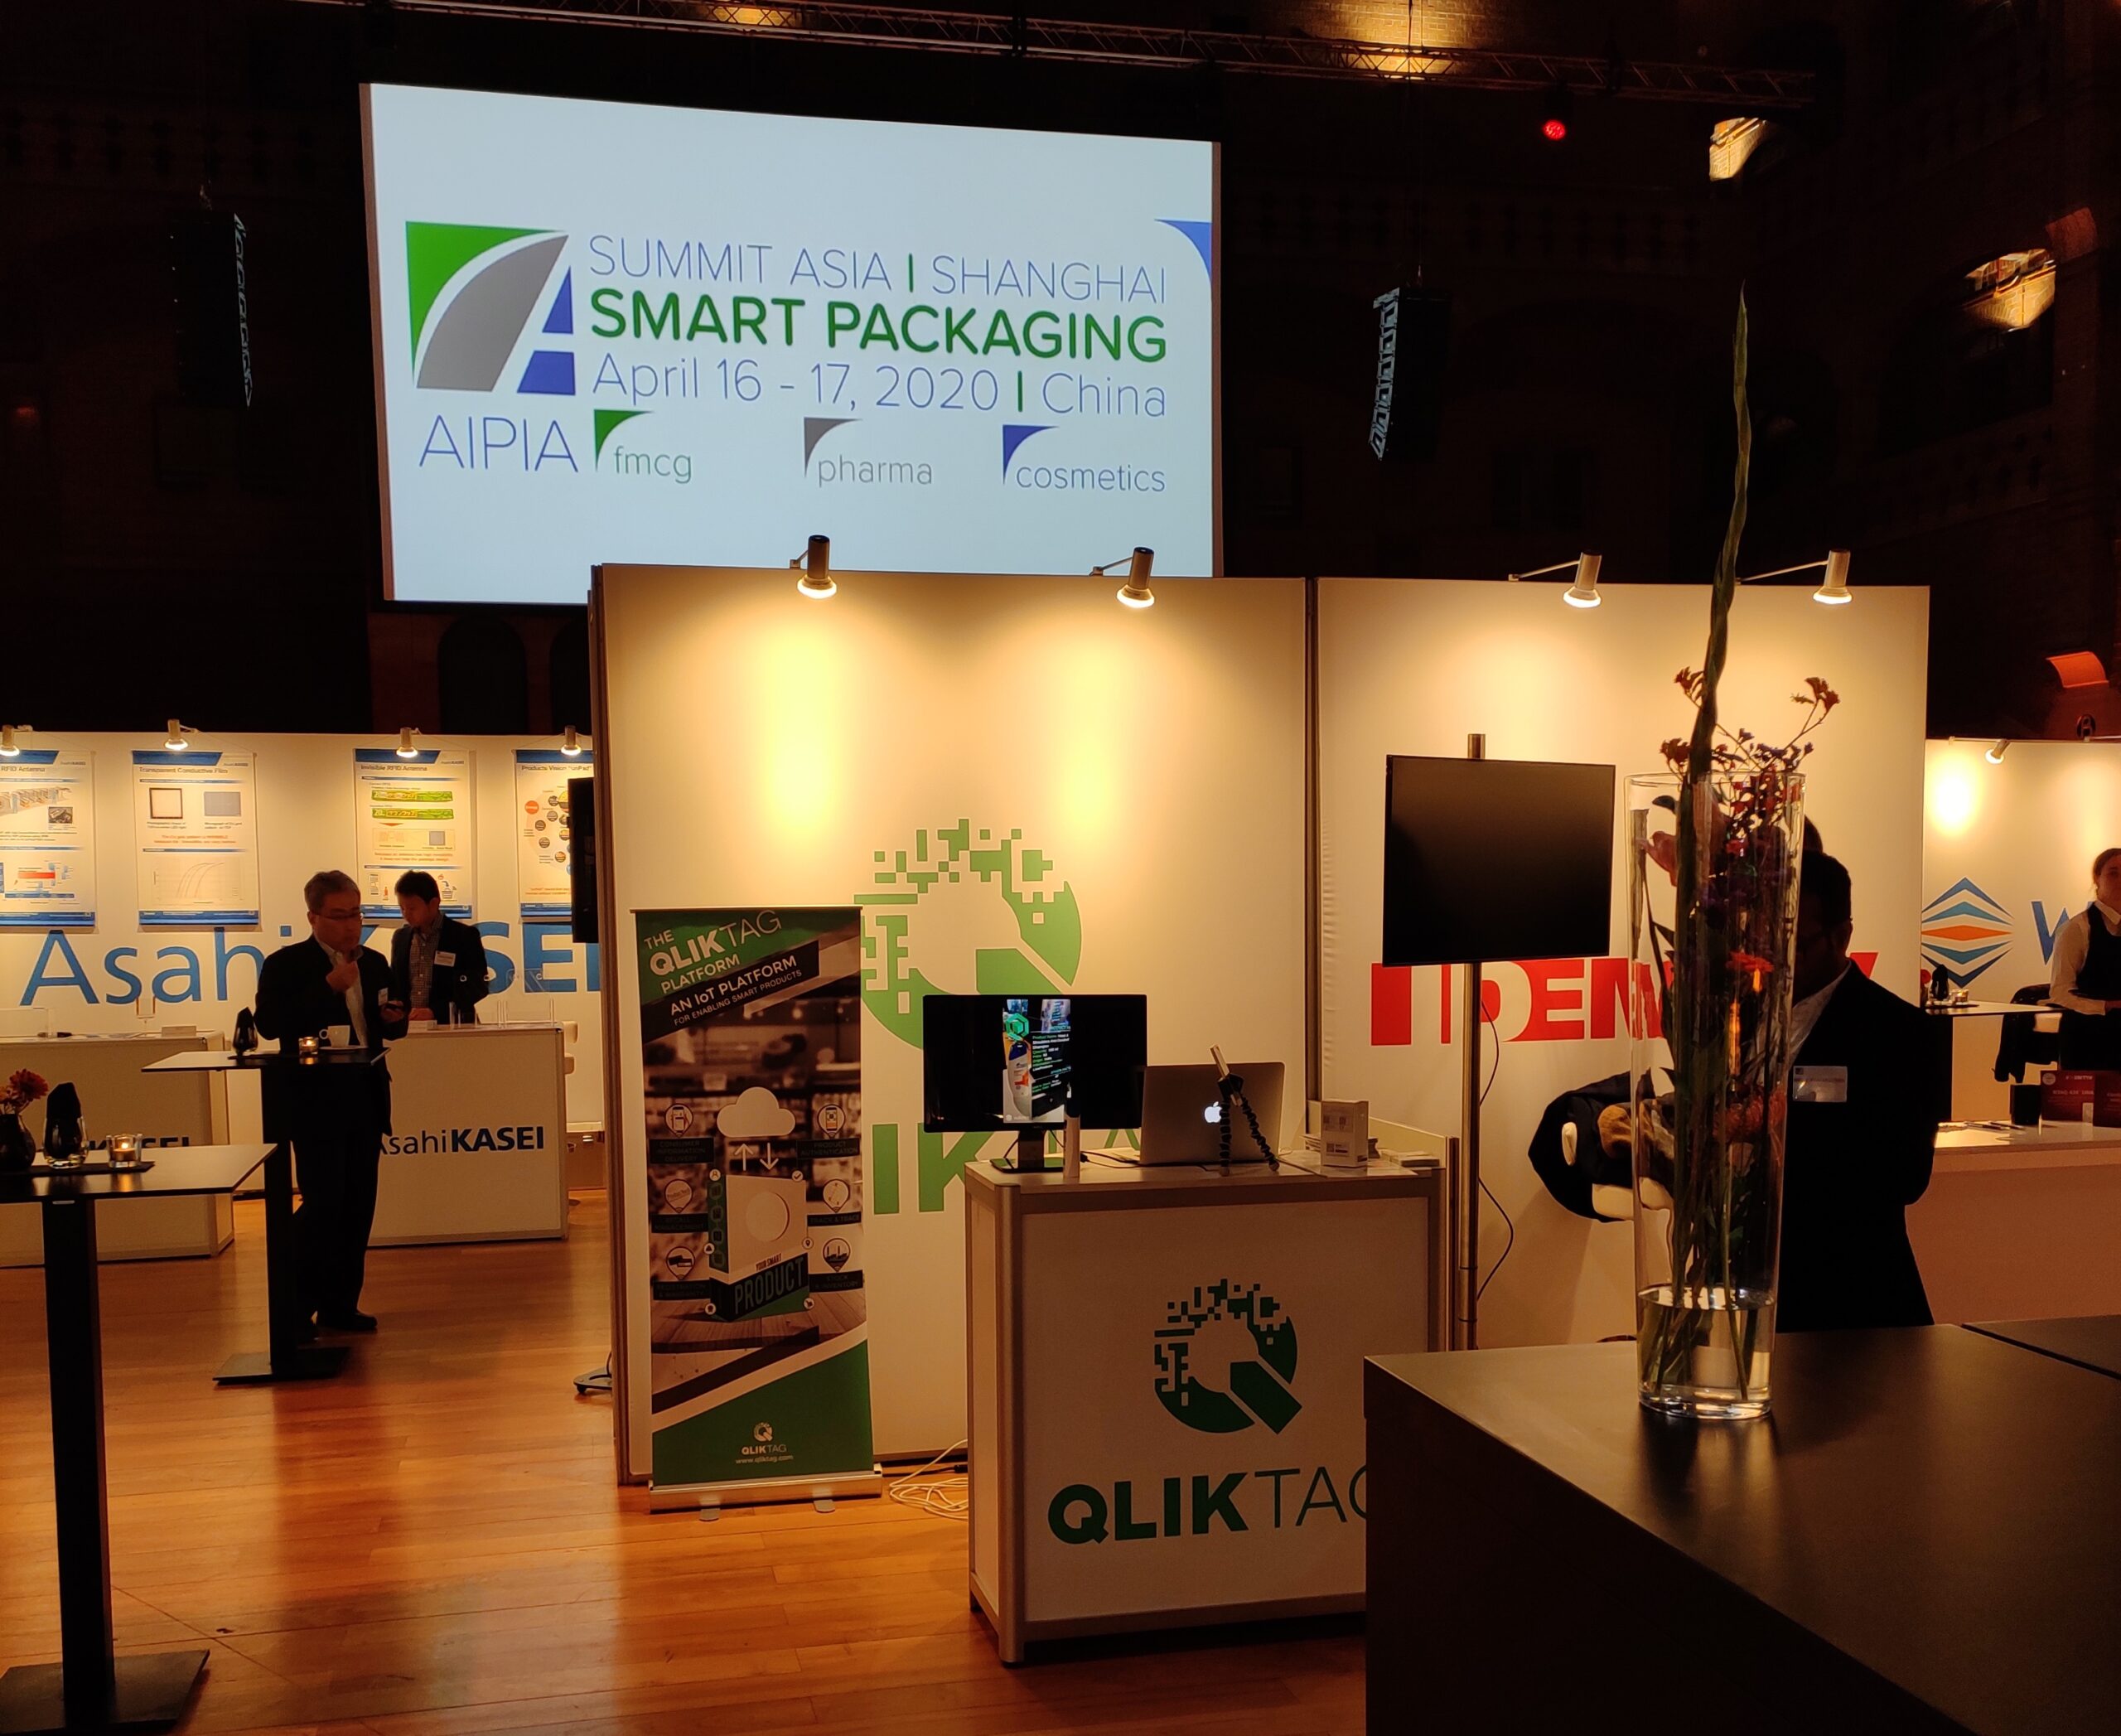 Qliktag Connected Packaging Platform - AIPIA World Congress